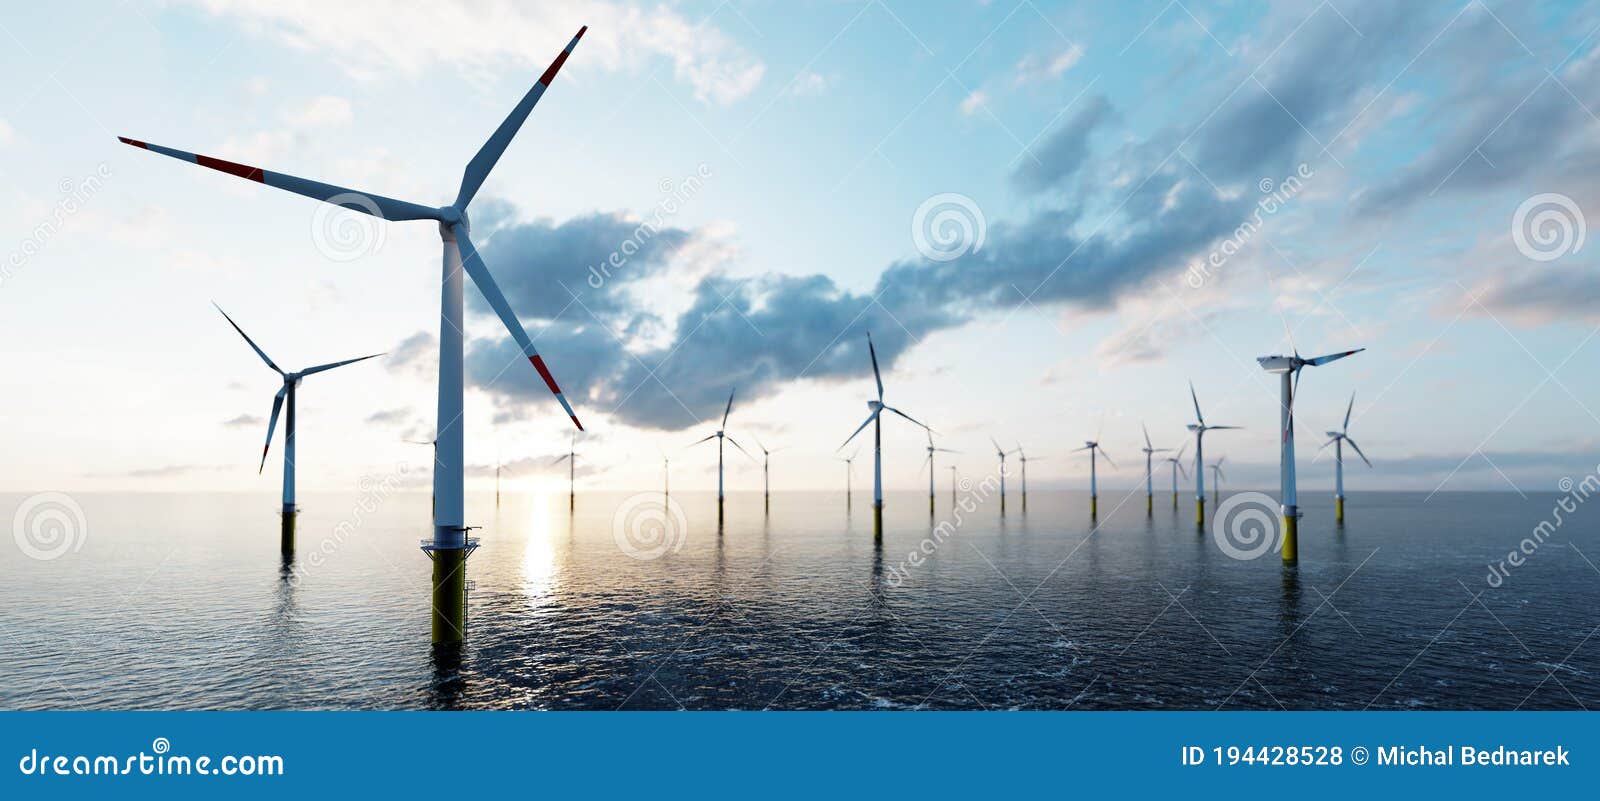 offshore wind turbines farm on the ocean. sustainable energy